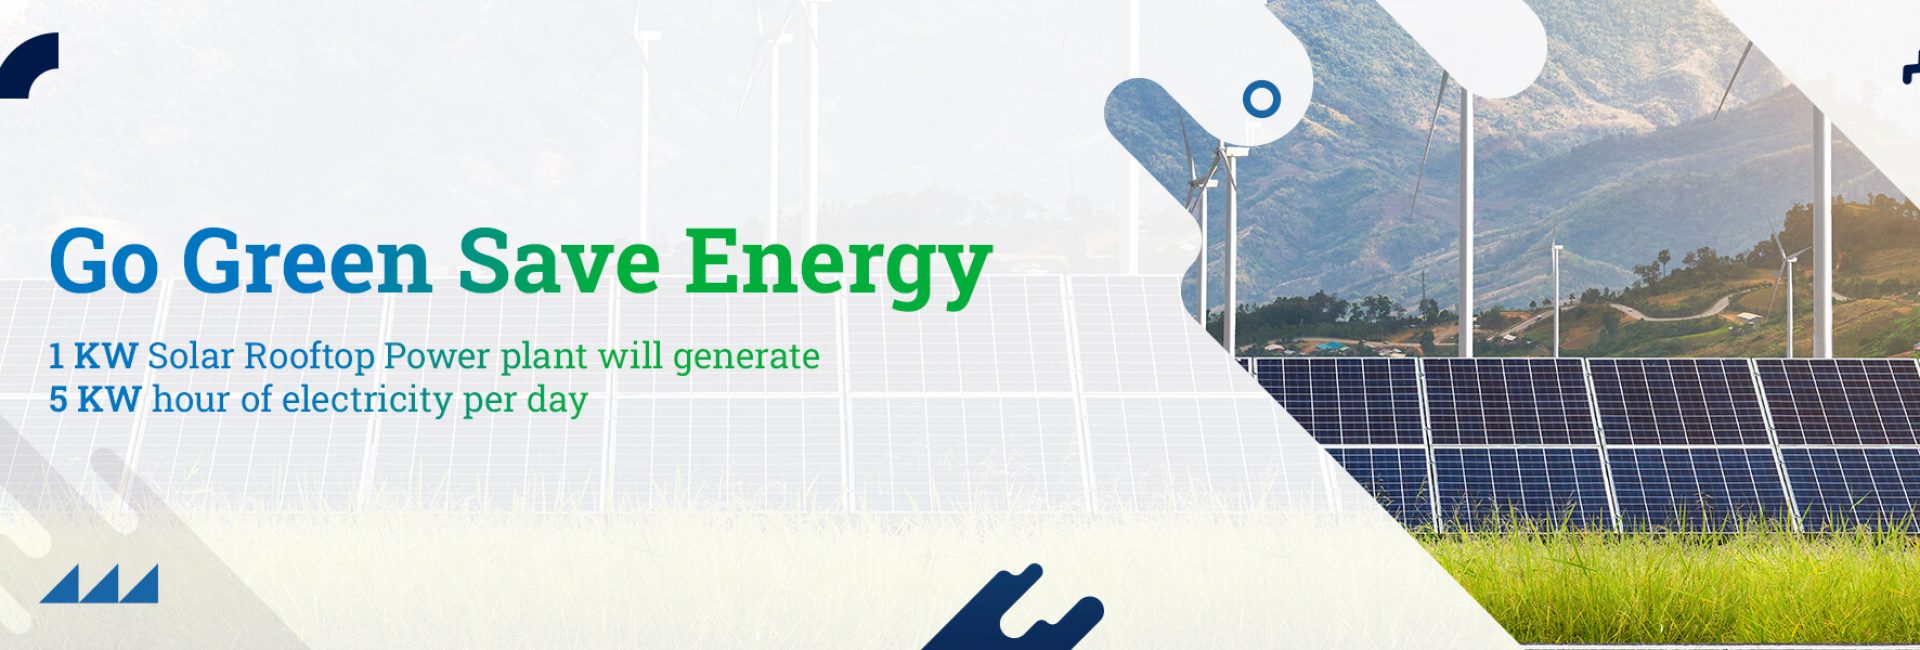 go-green-save-energy